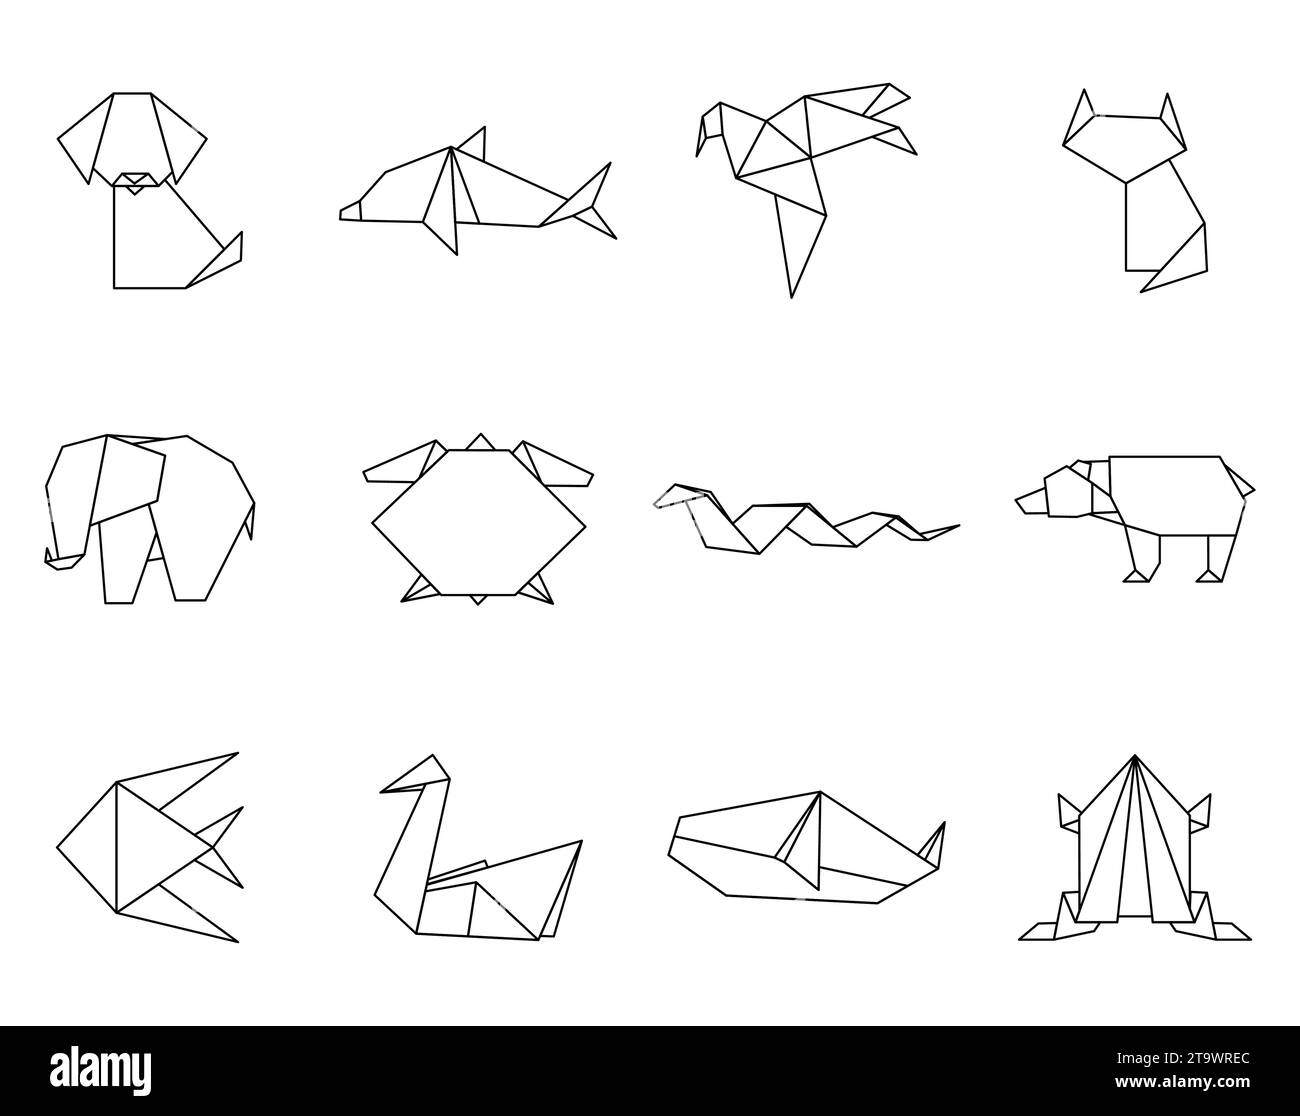 Origami japanese animals set icons. Modern hobby. Polygon folded paper figure toy. Art of paper folding. Cartoon geometric wild animal shaped figures. Stock Vector